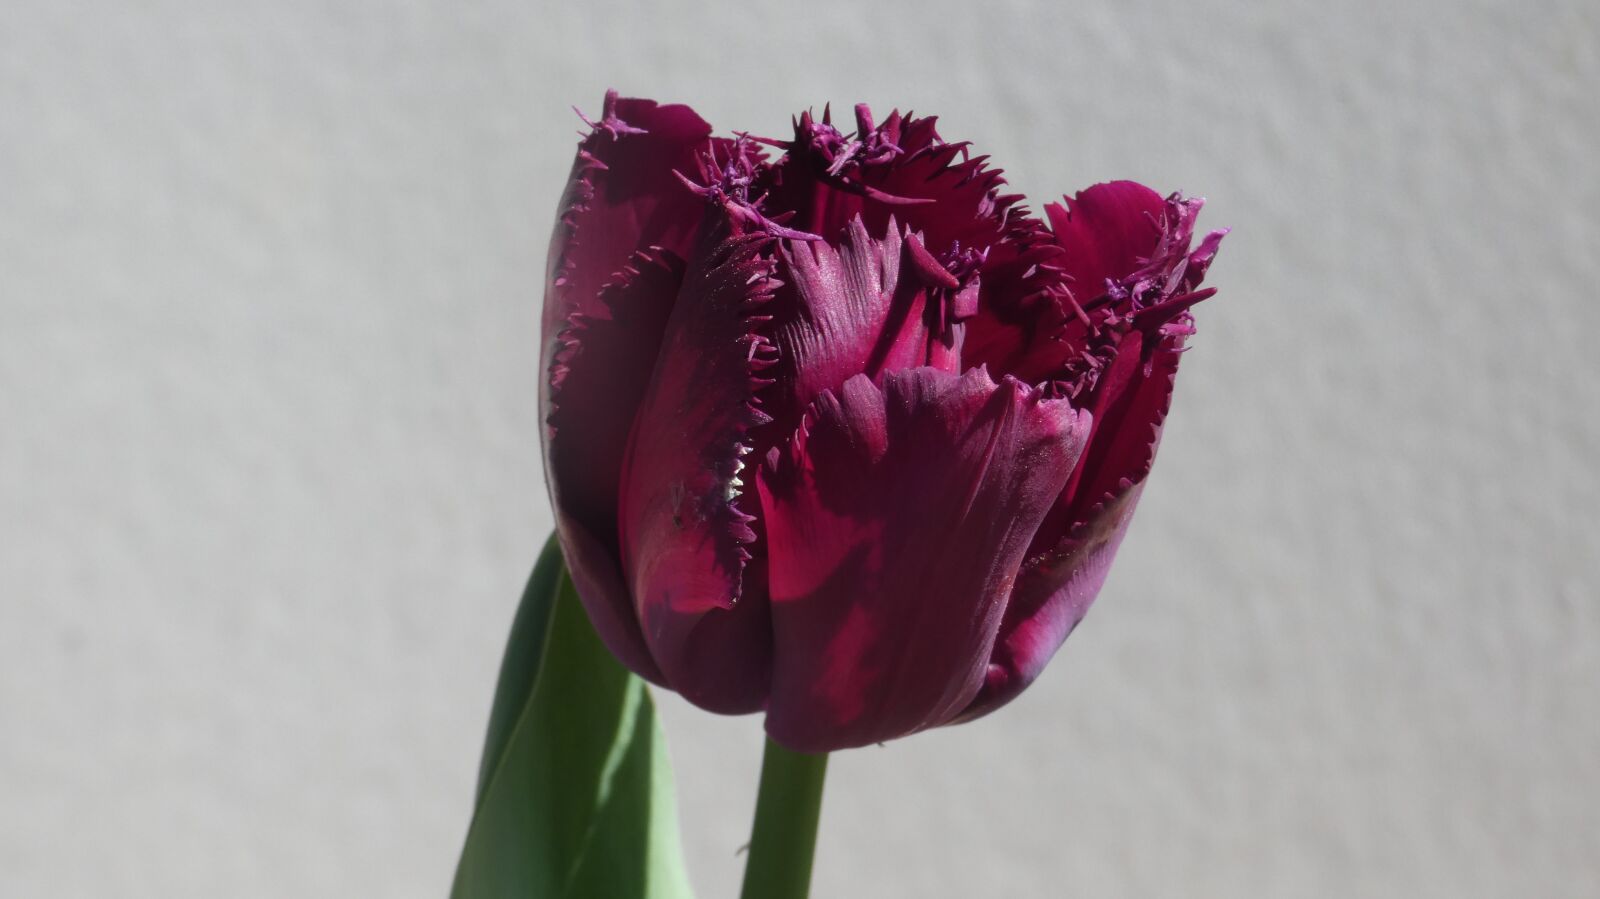 Panasonic DC-FZ80 sample photo. Tulips, flowers, spring photography